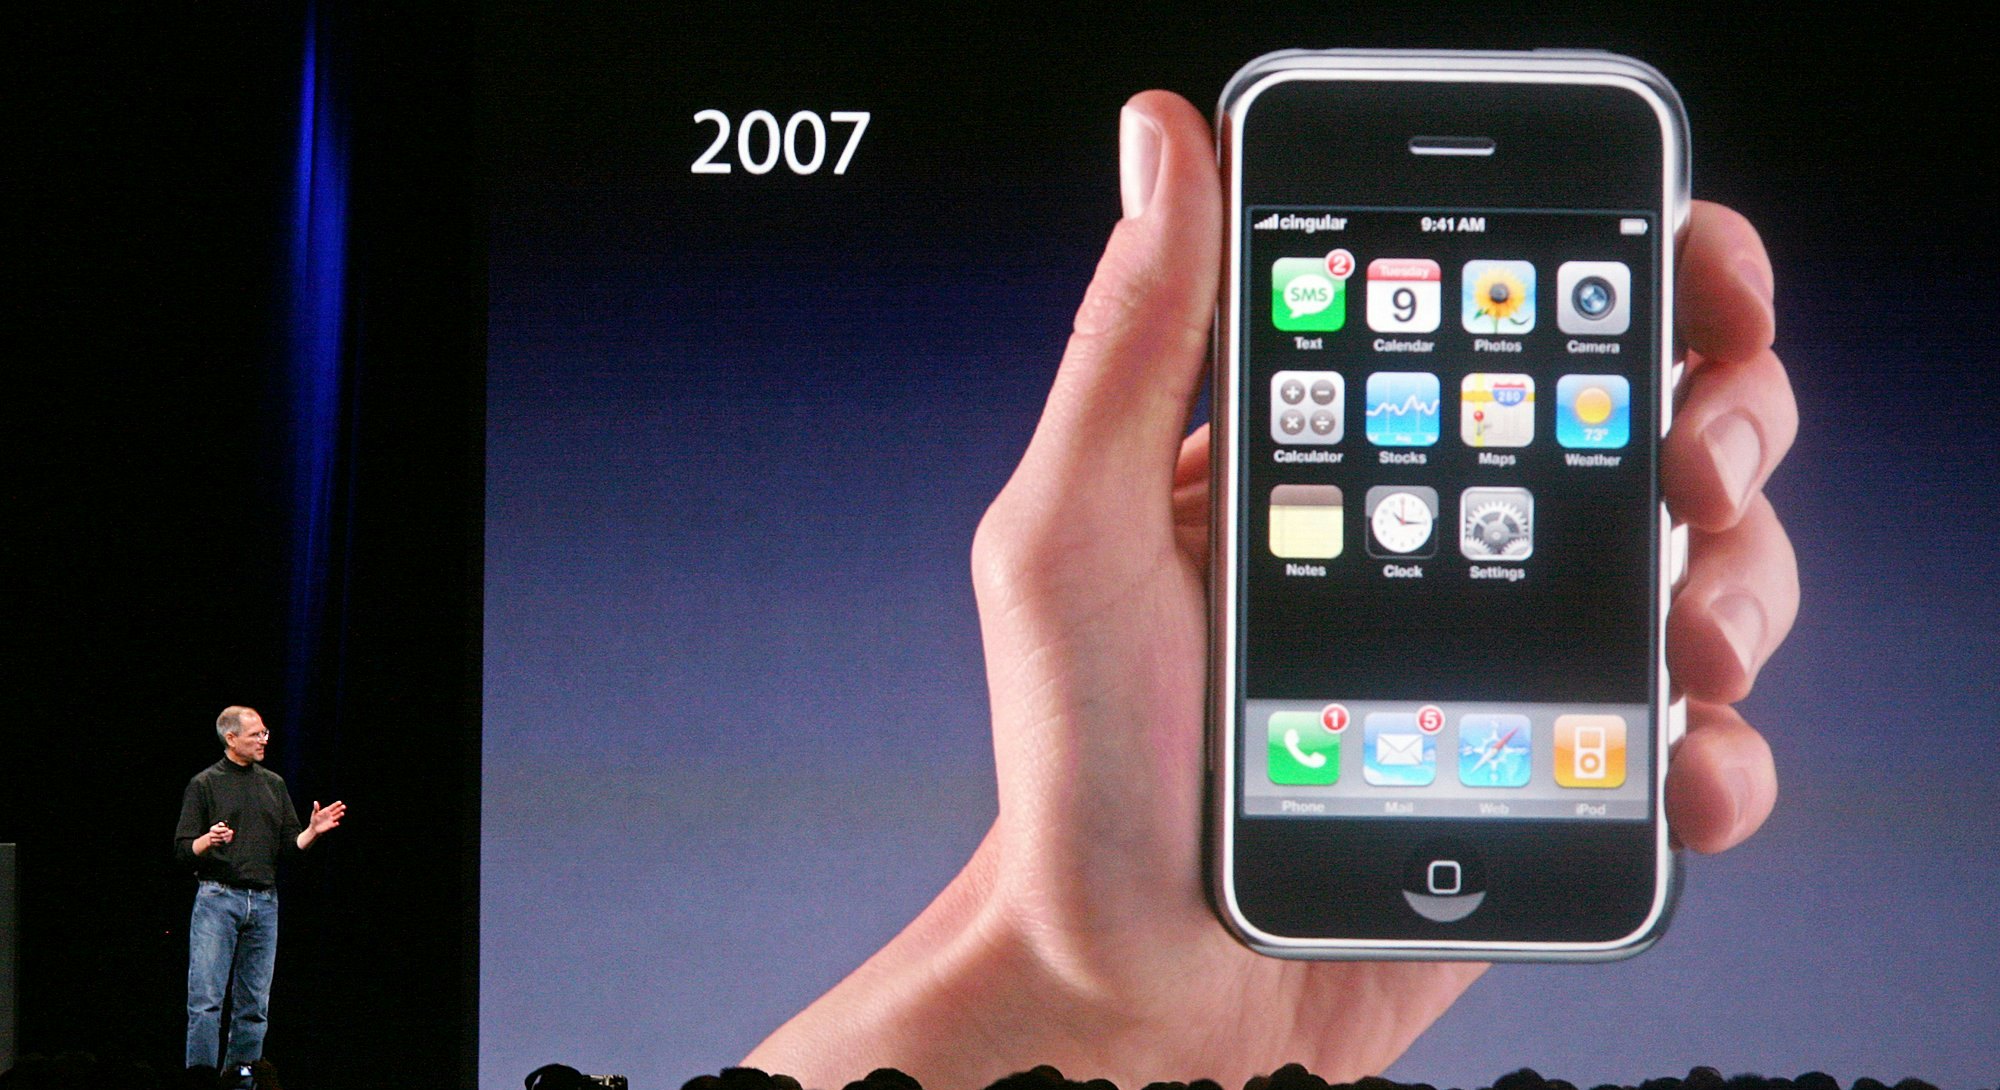 The original iPhone design from 2007.